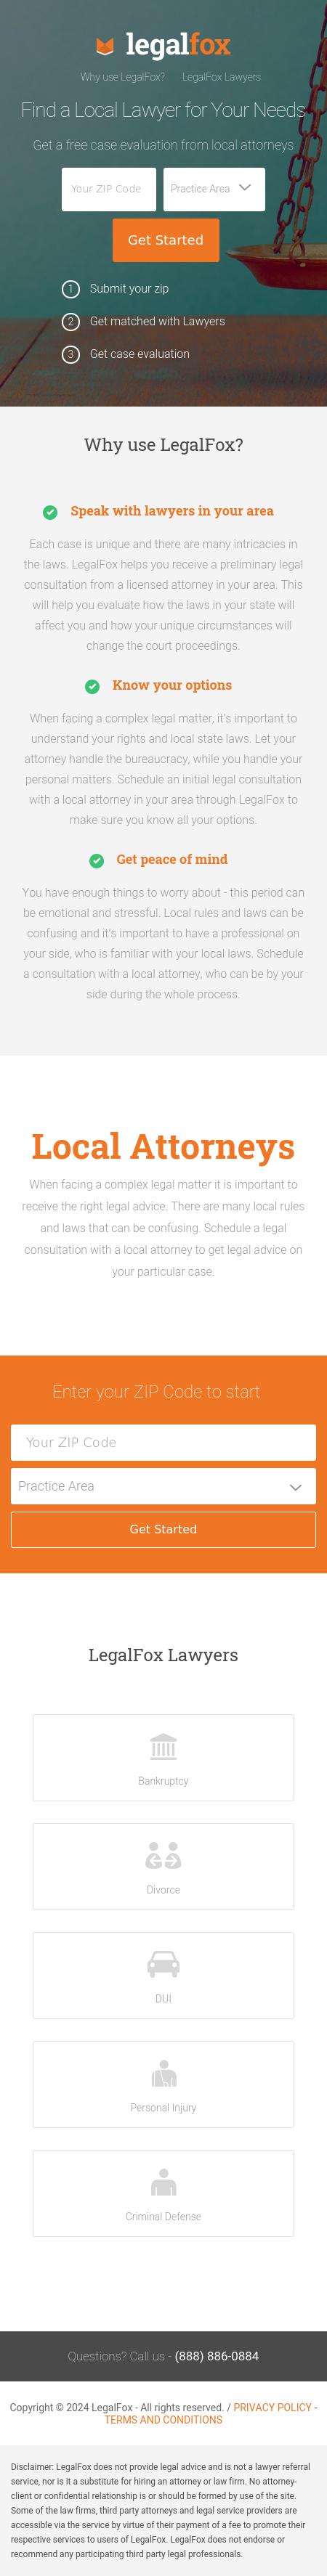 Find a Local Attorney - Scottsdale AZ Lawyers